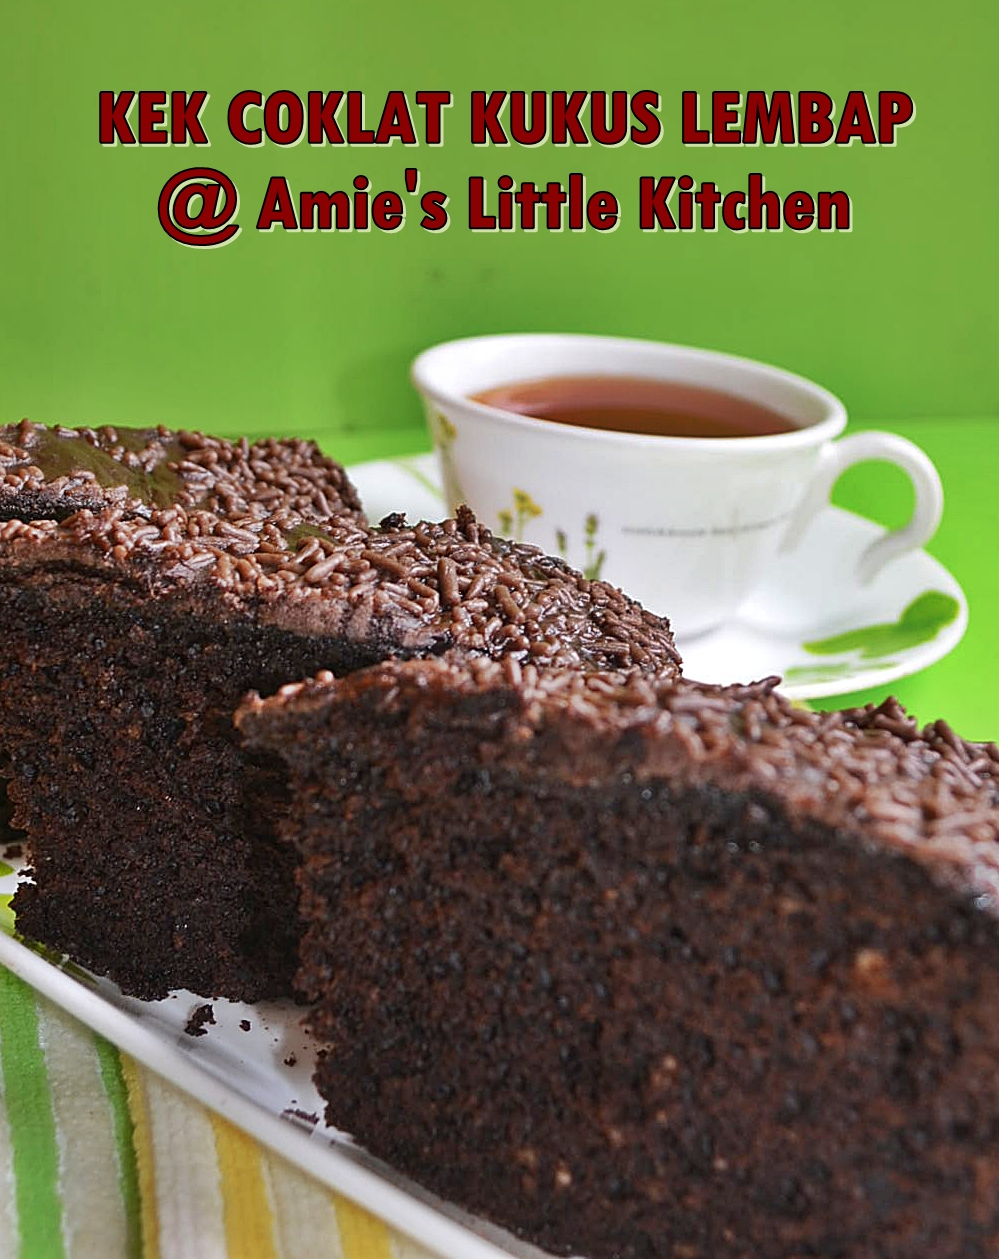 AMIE'S LITTLE KITCHEN: Kek Coklat Kukus Lembap!